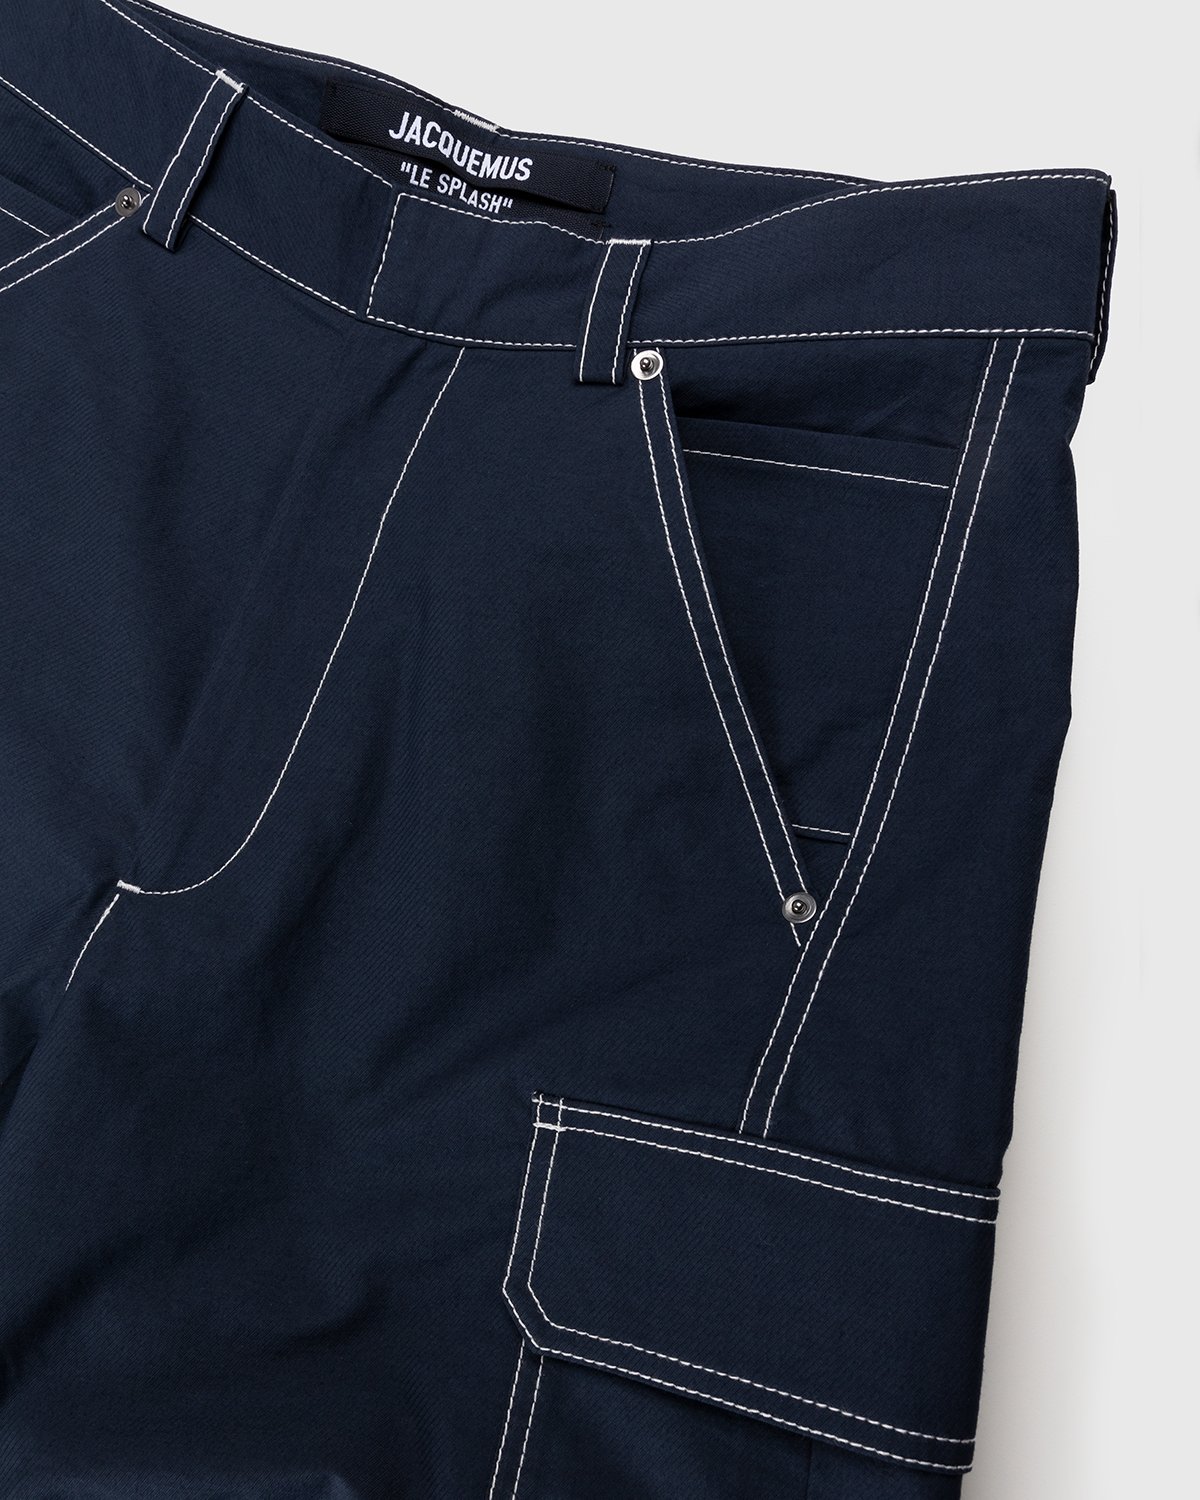 JACQUEMUS - Le Pantalon Peche Navy - Clothing - Blue - Image 4